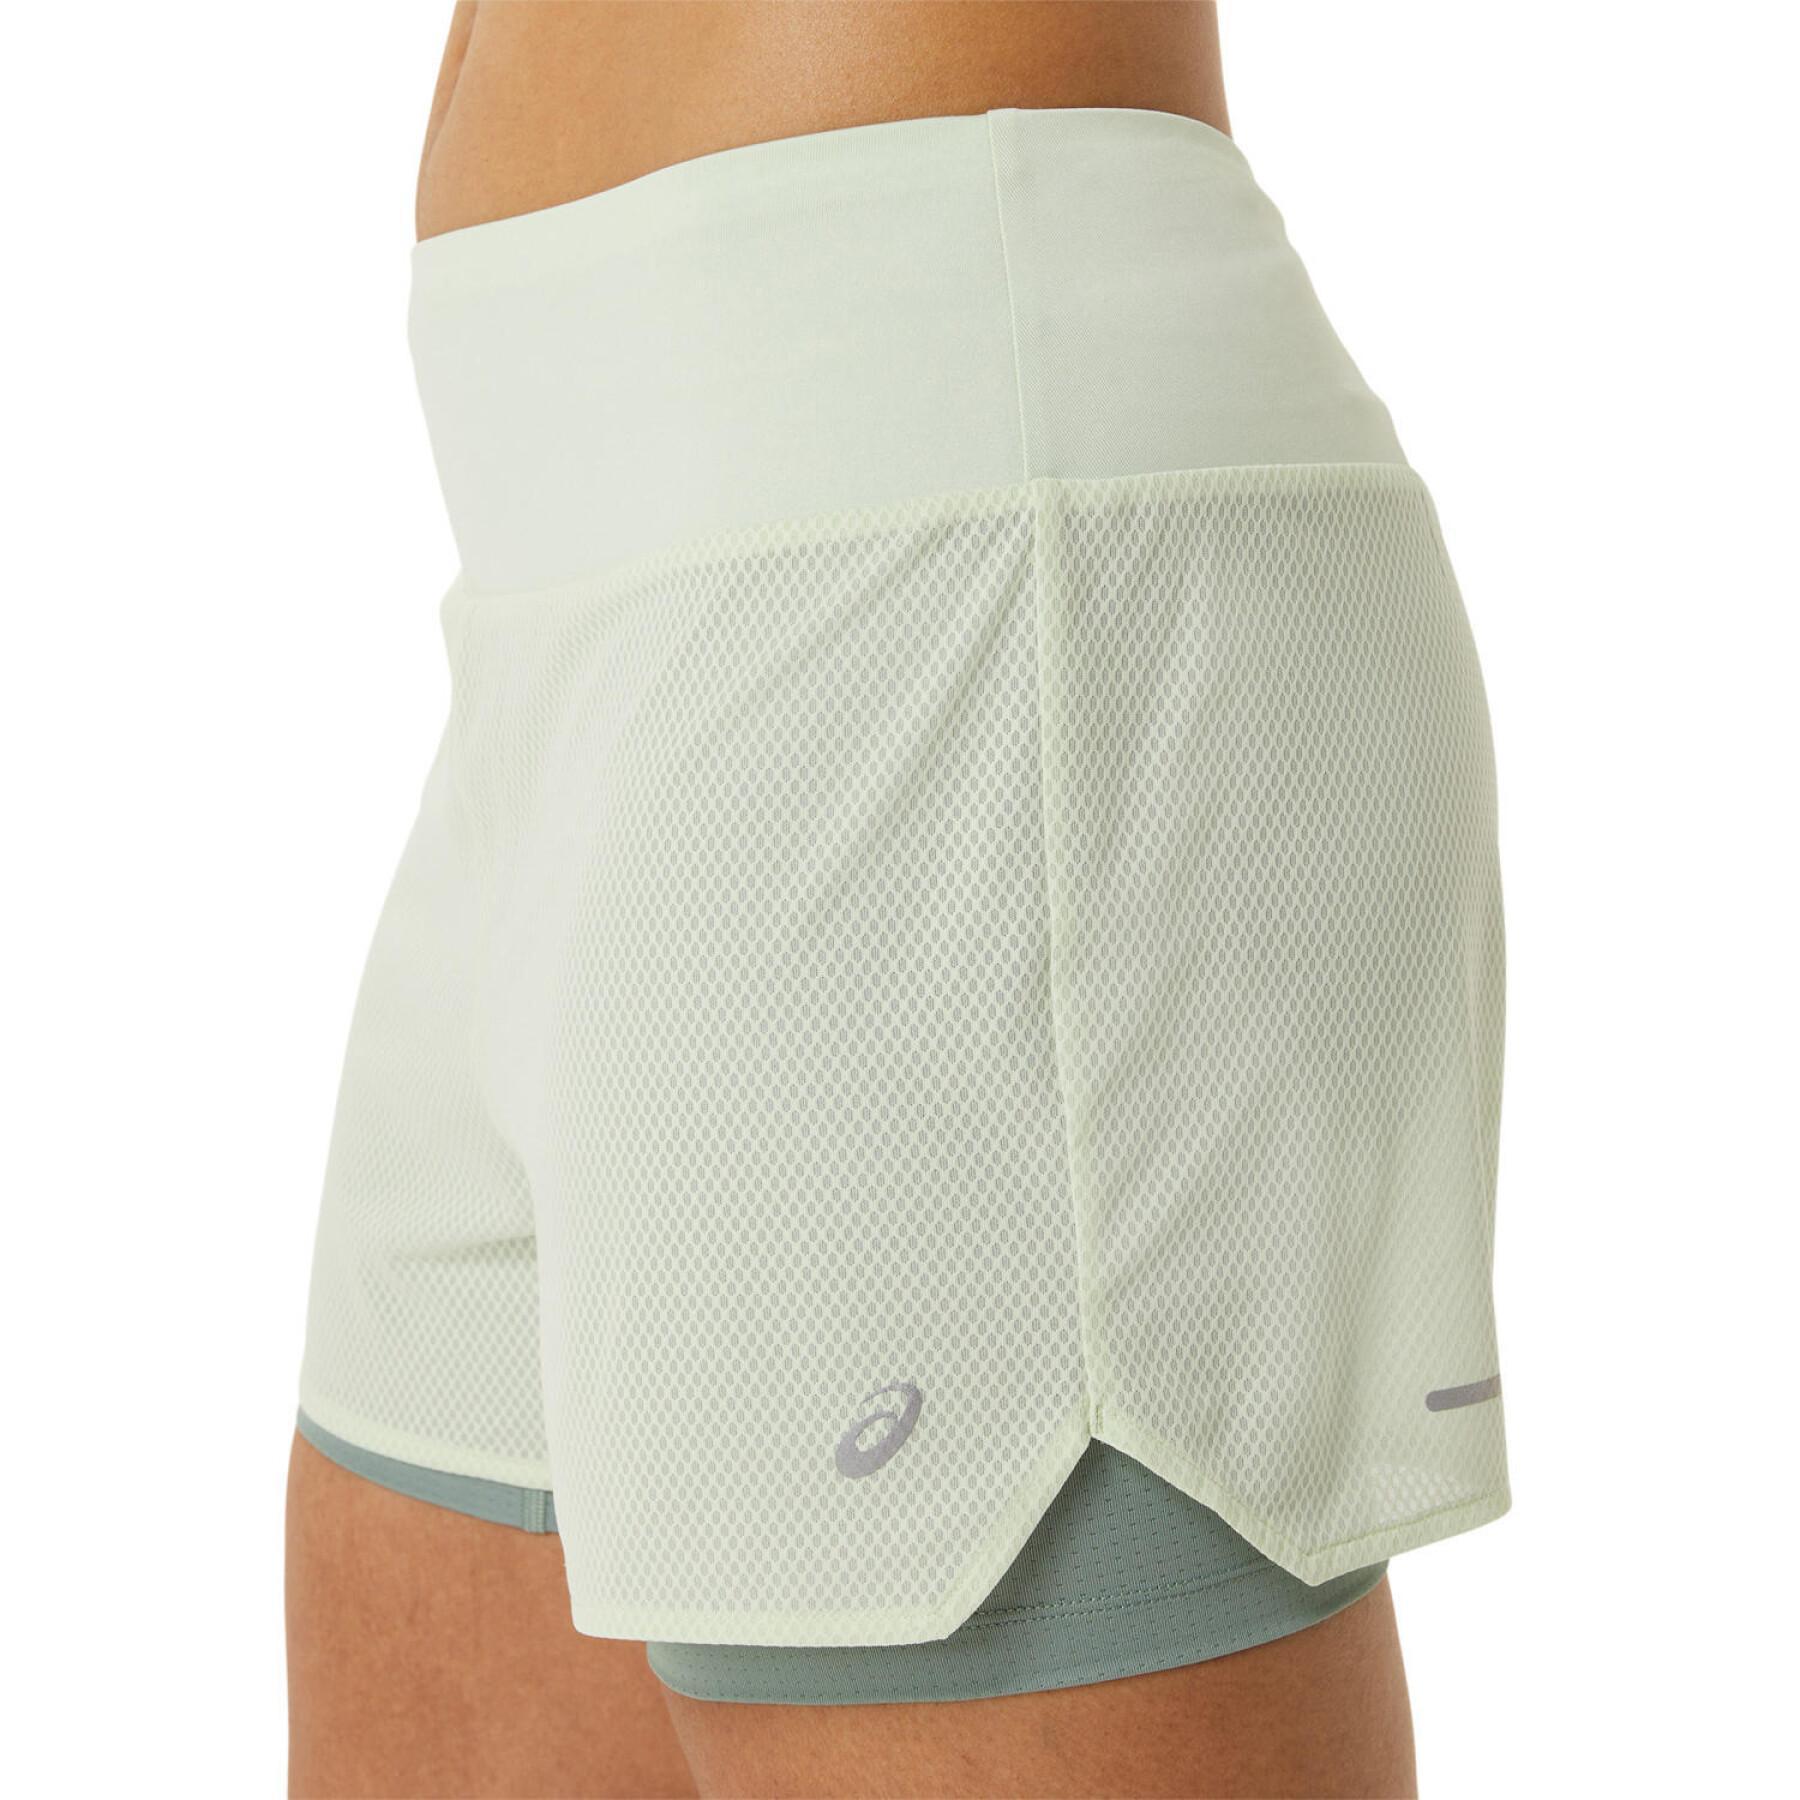 Women's 2-in-1 shorts Asics Ventilate